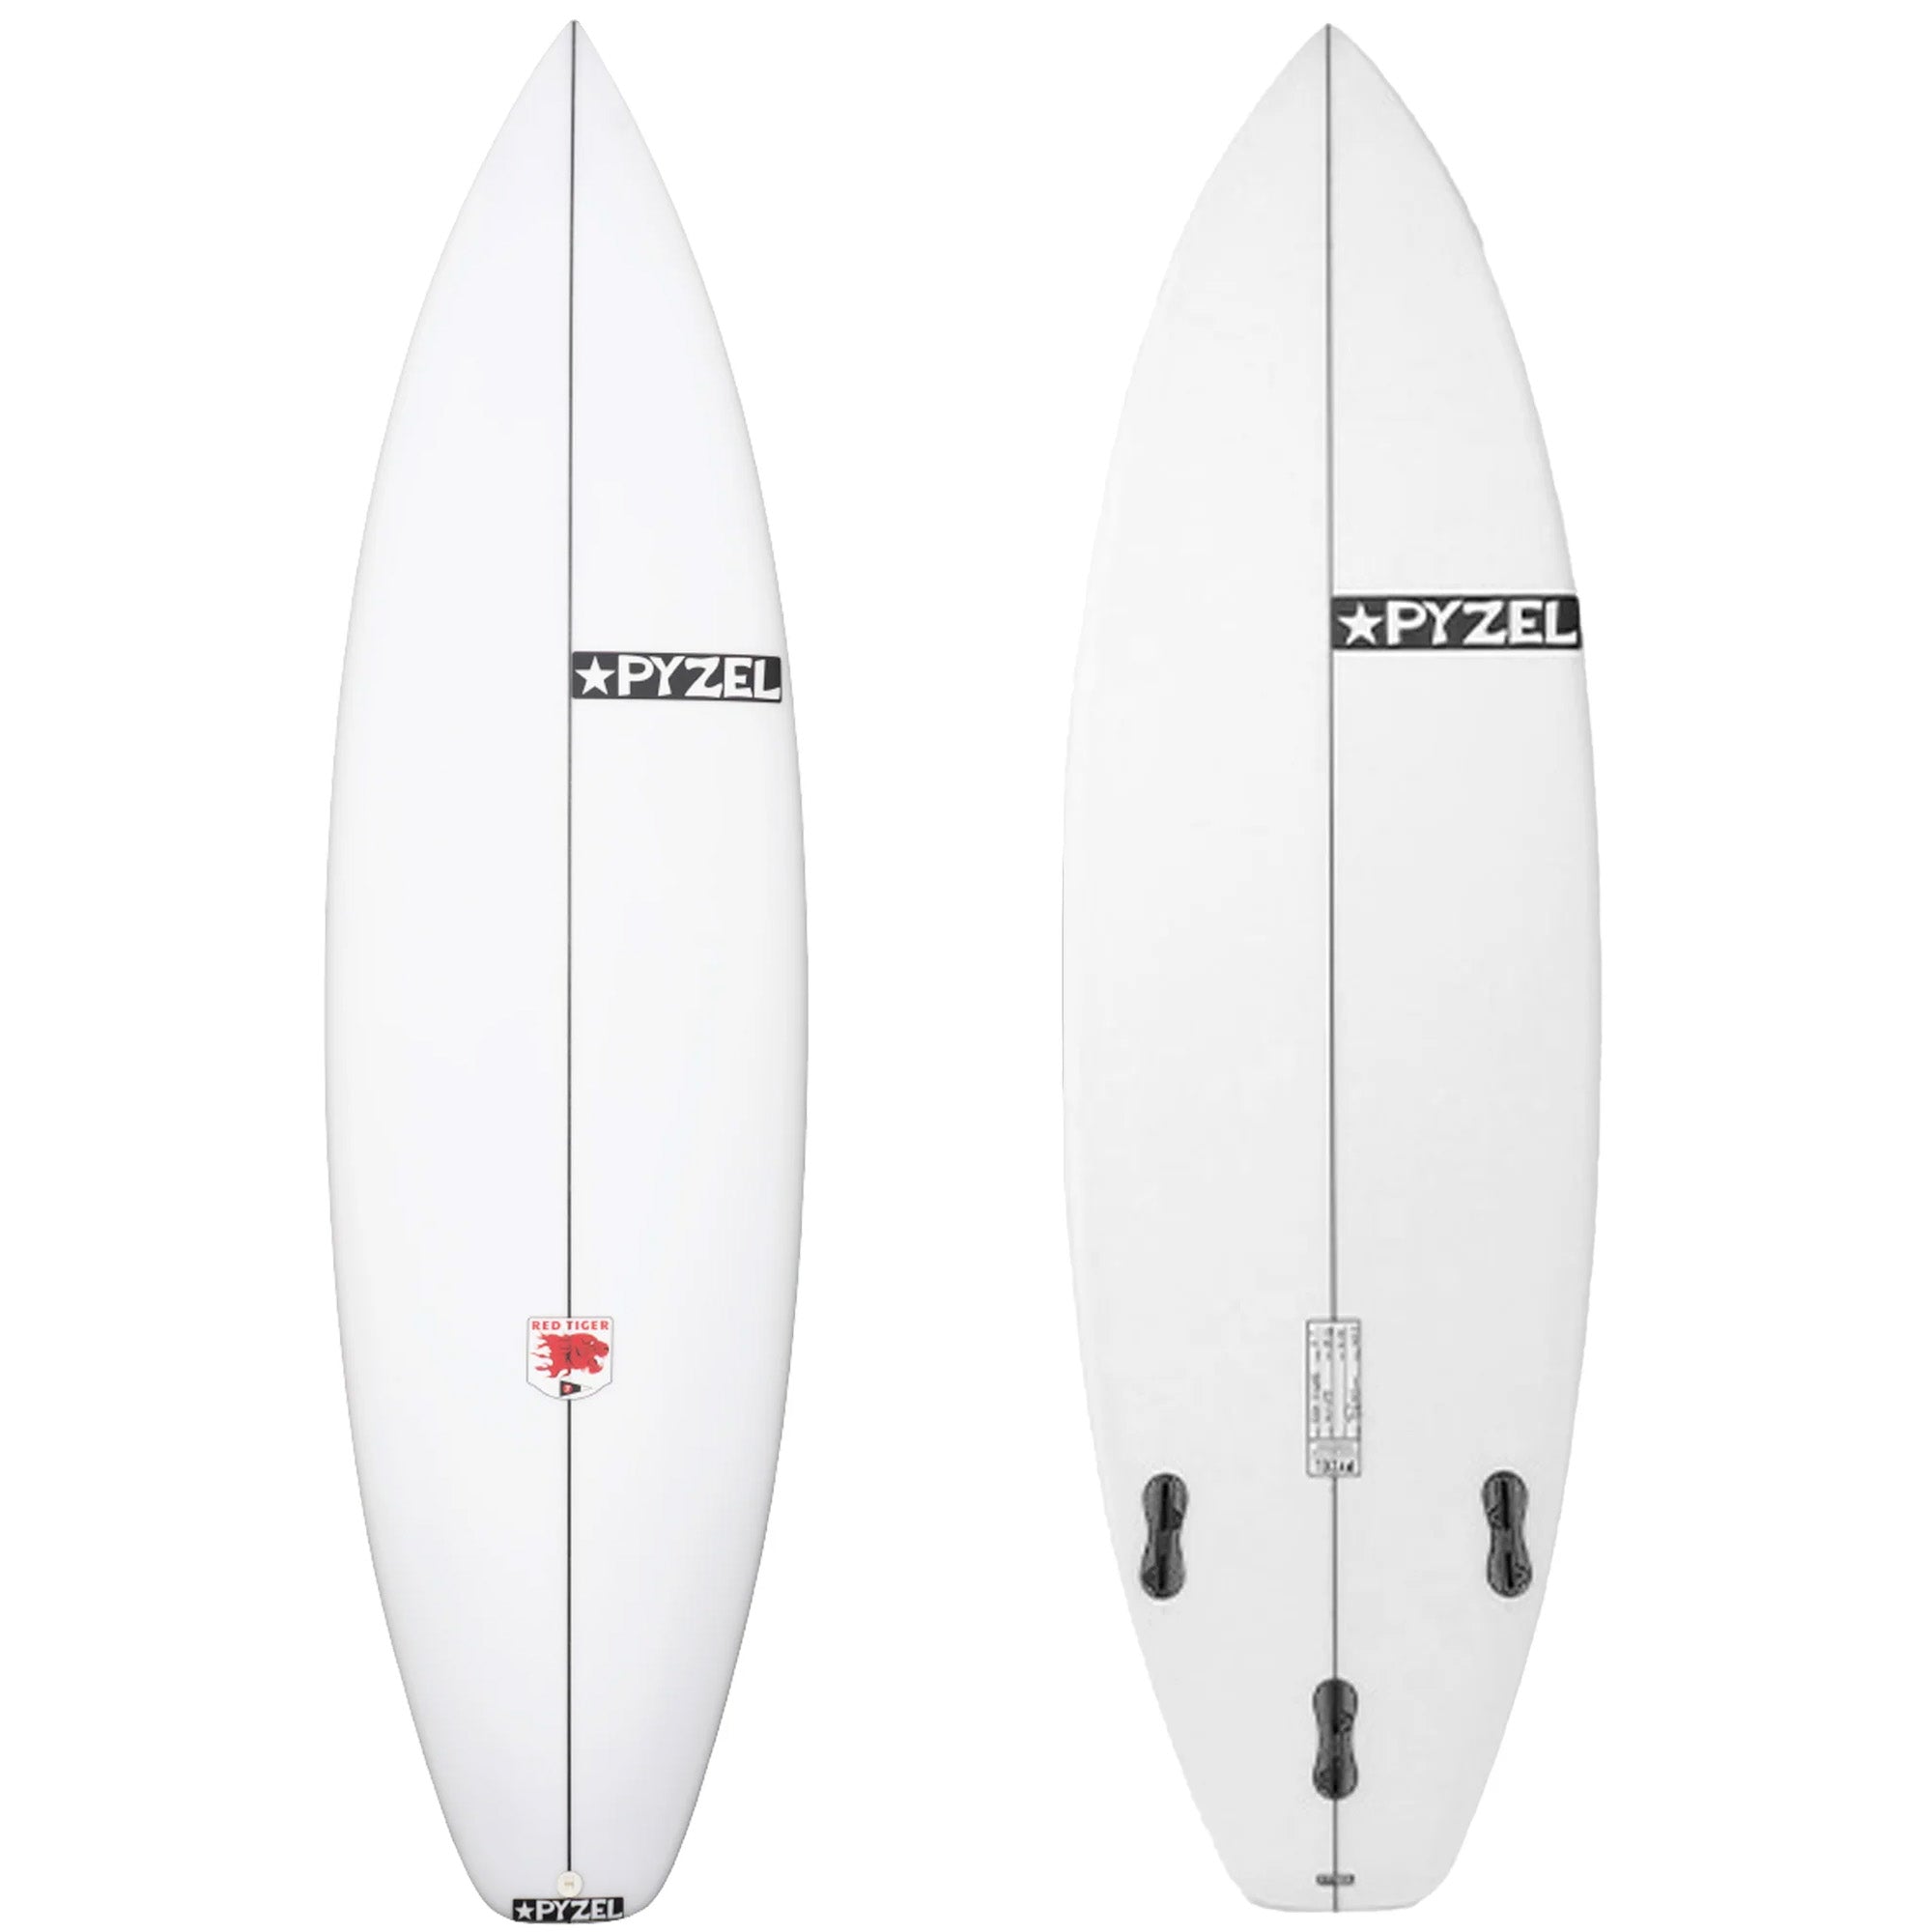 Pyzel Red Tiger Surfboard - FCS II